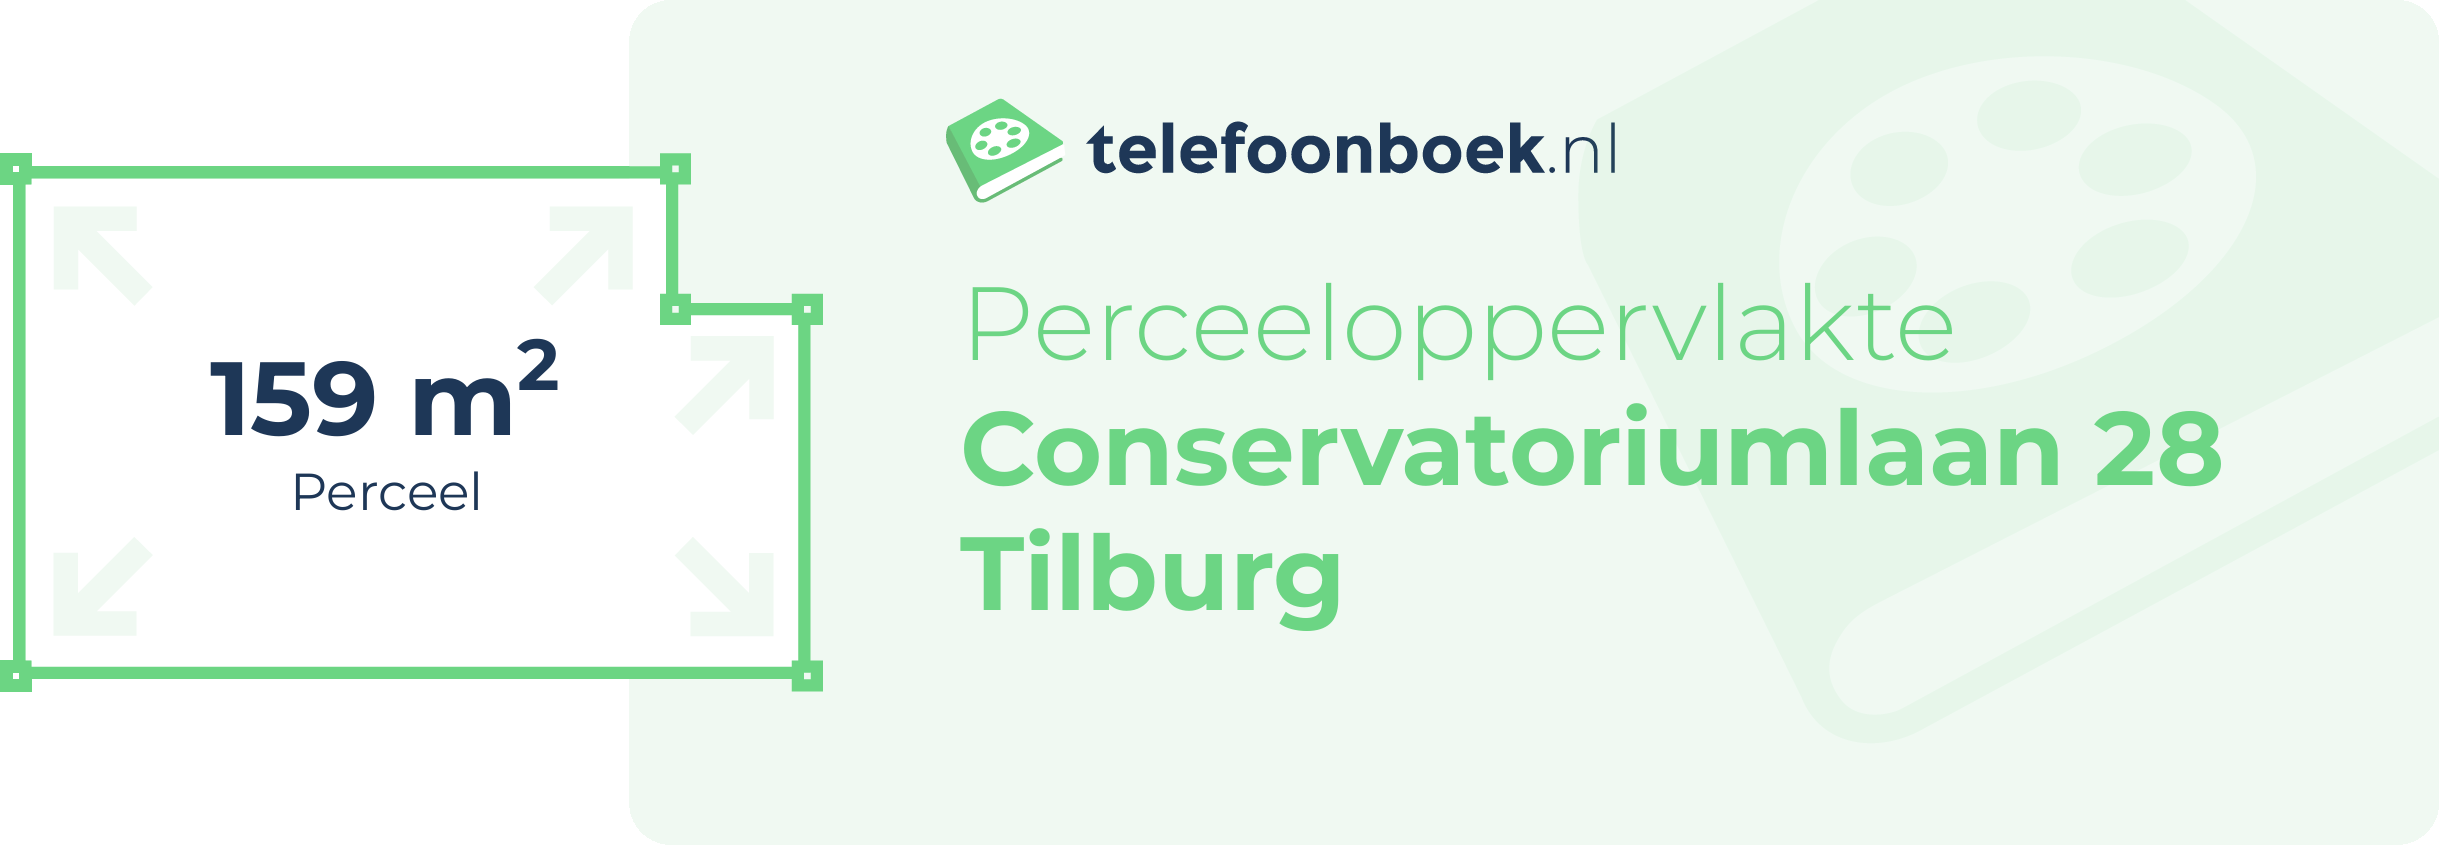 Perceeloppervlakte Conservatoriumlaan 28 Tilburg